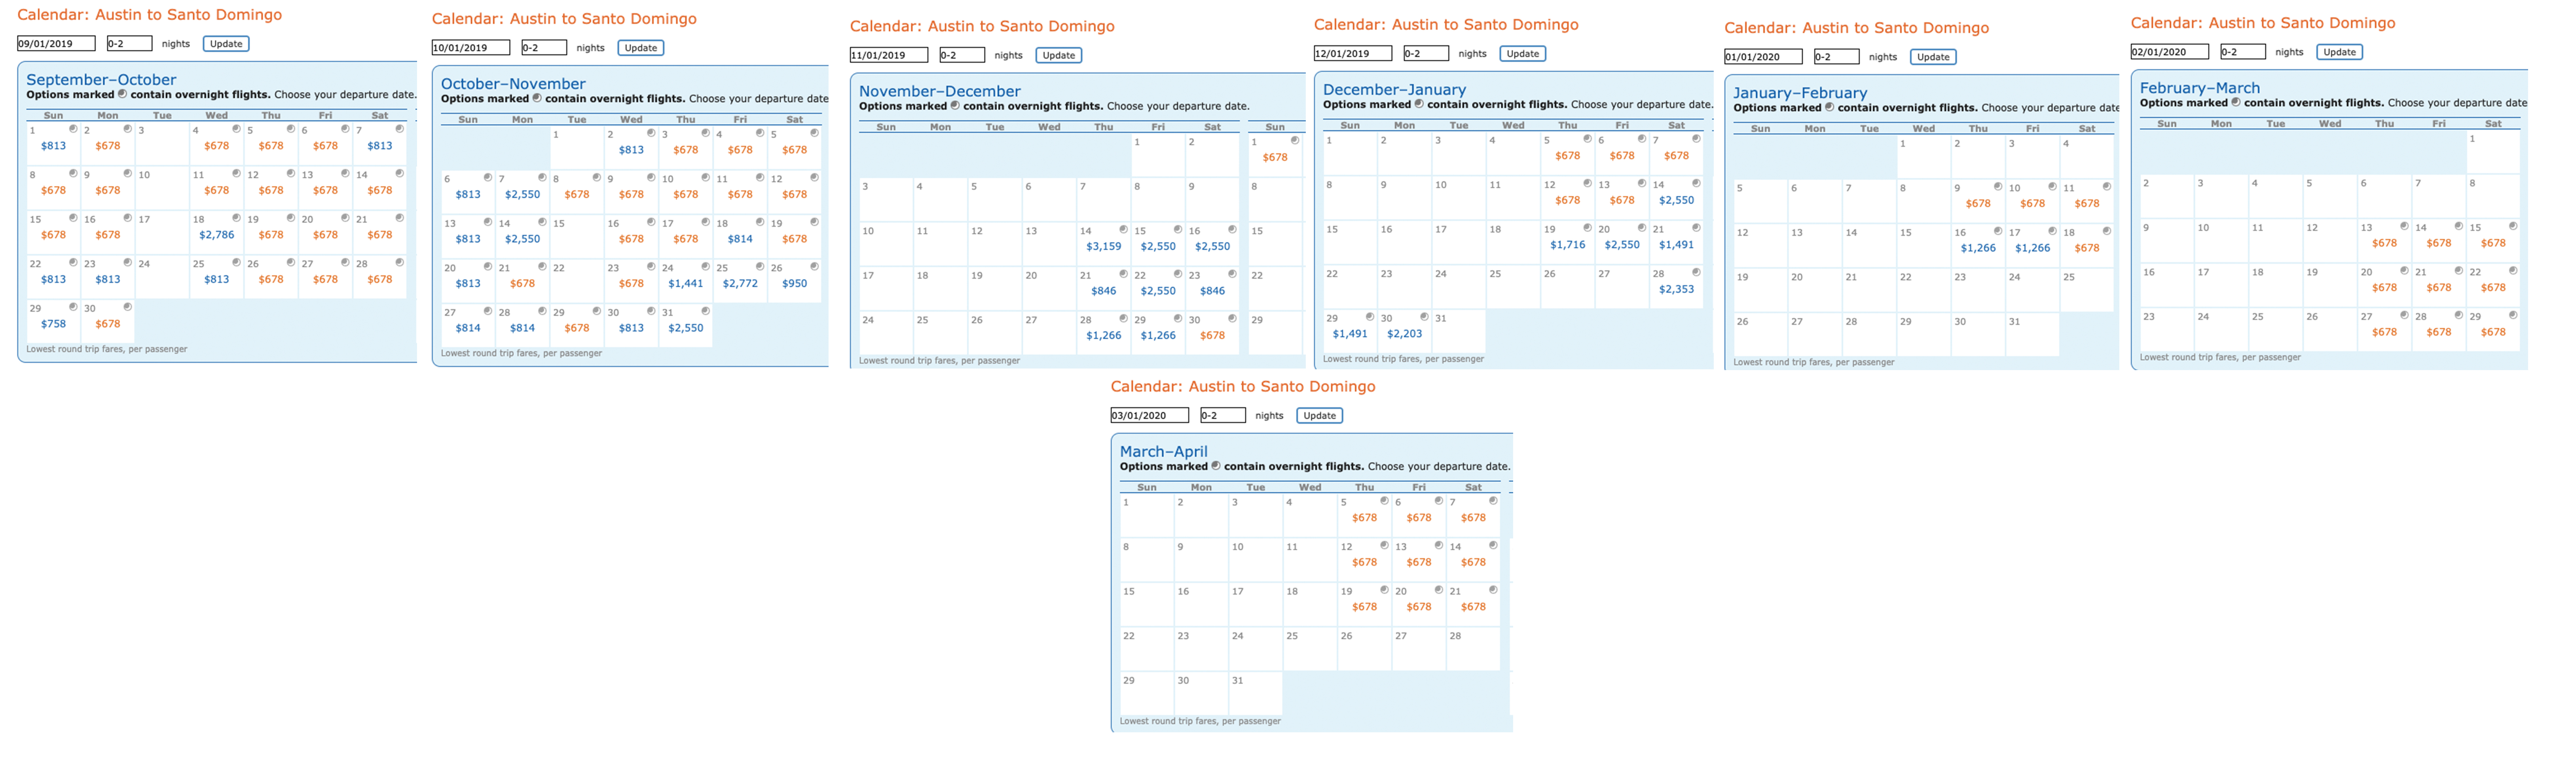 Calendar of Delta MQD run itineraries on Aeromexico from Austin (AUS) to Santo Domingo (SDQ).